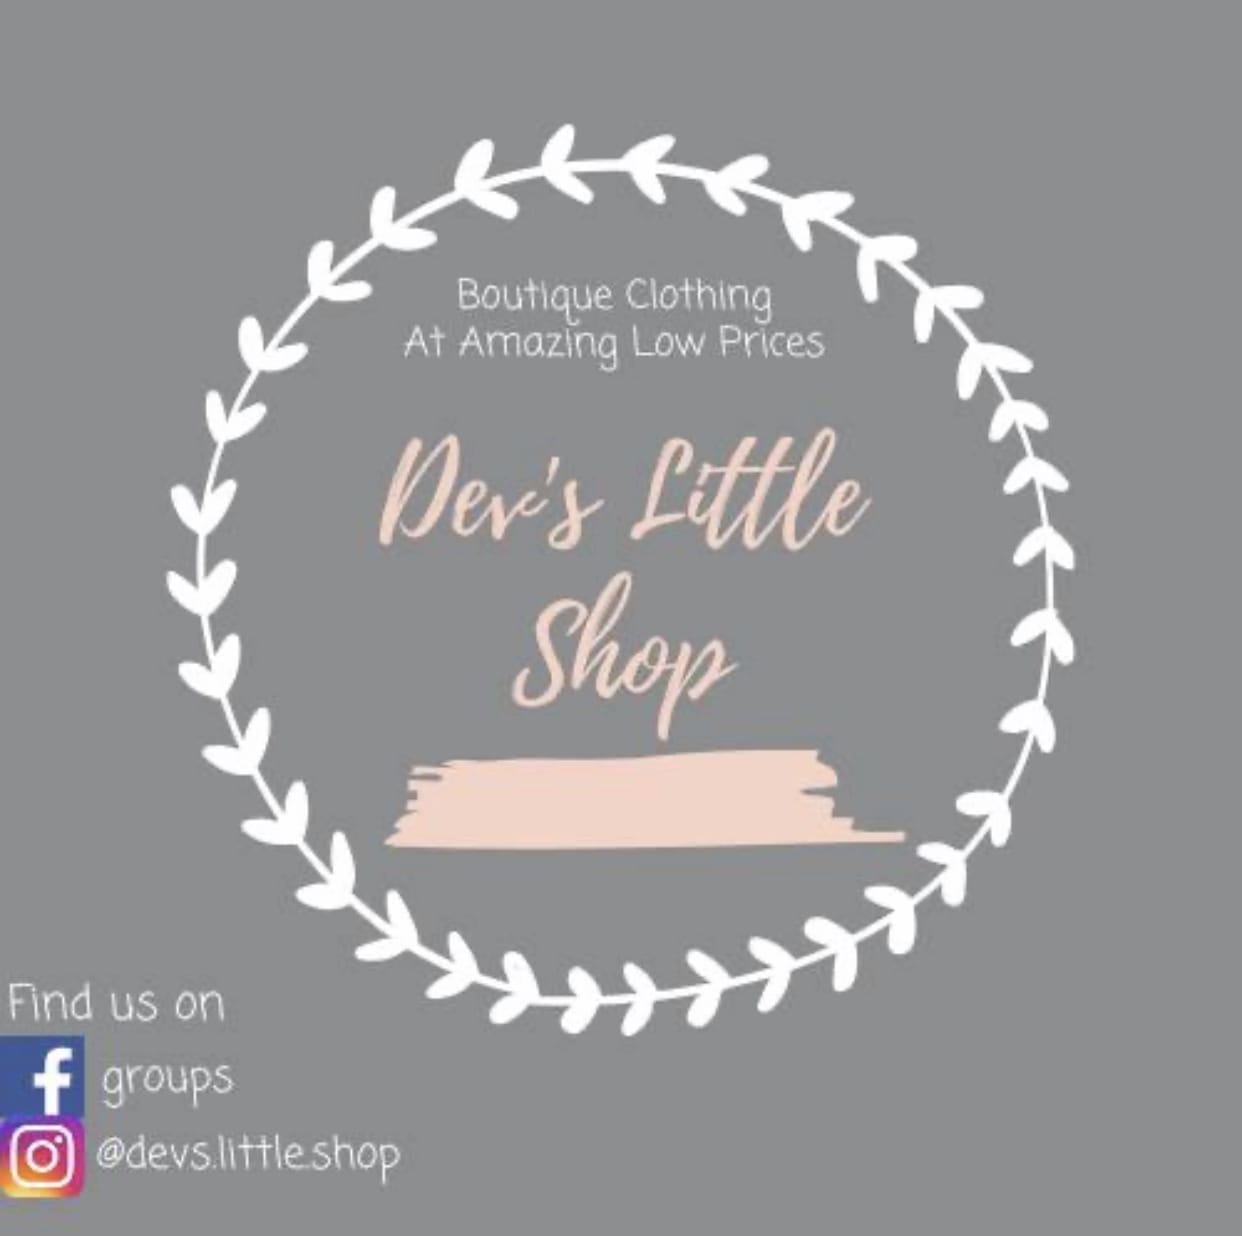 Dev’s Little Shop